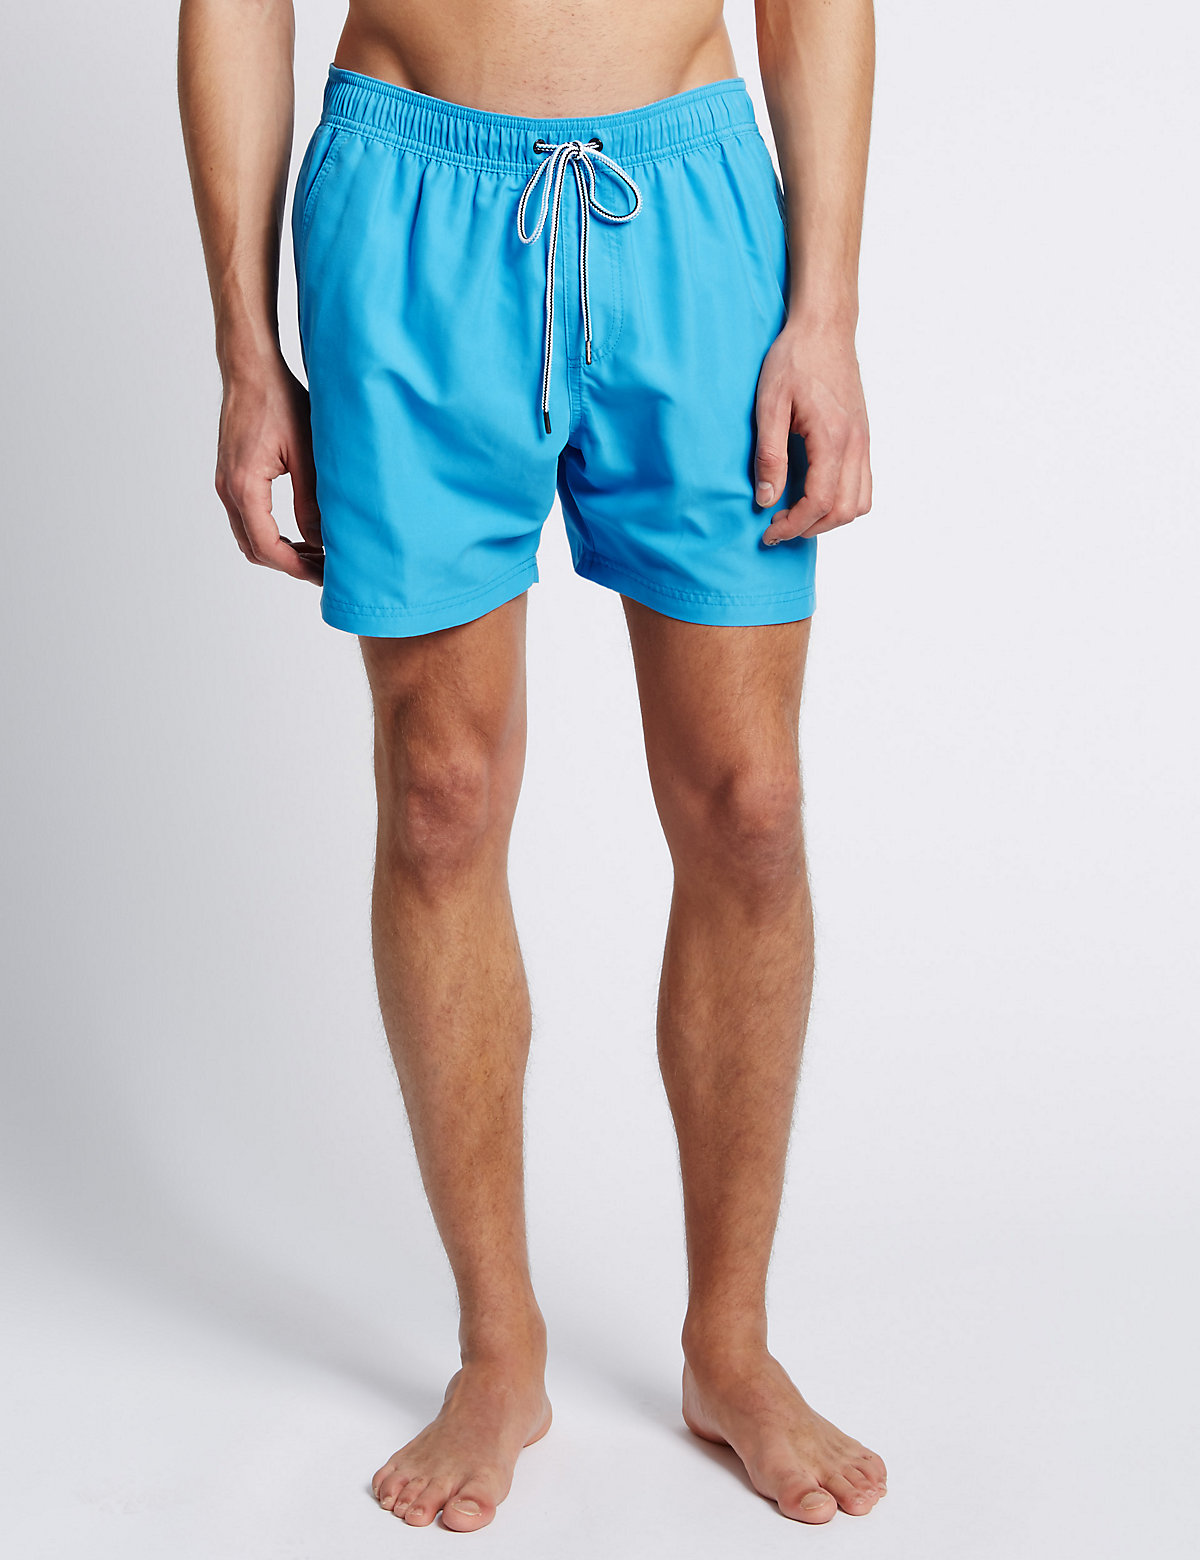 Marks & Spencer Catalogue - Men's Swimwear from Marks & Spencer at ...